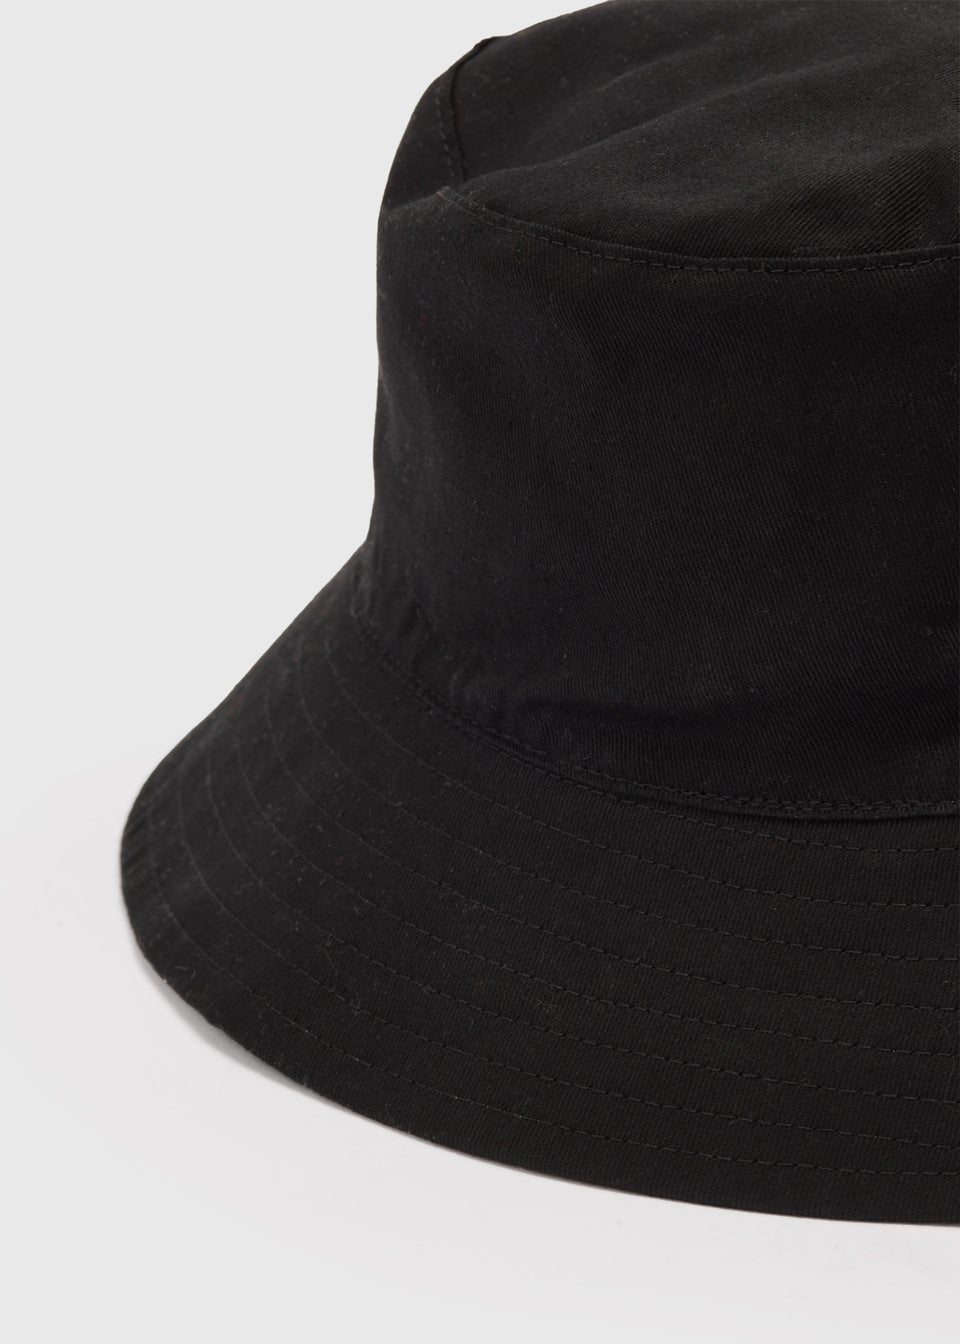 Black/Khaki Reversible Bucket Hat